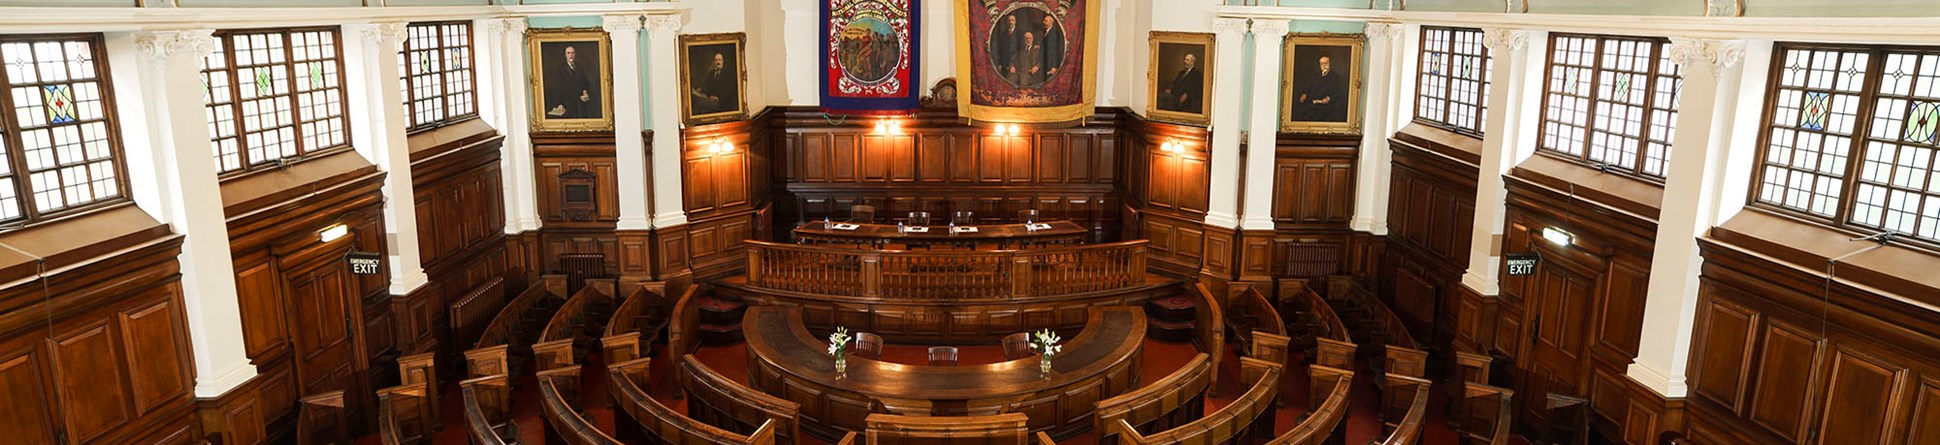 Debating chamber inside the Pitman's Parliament